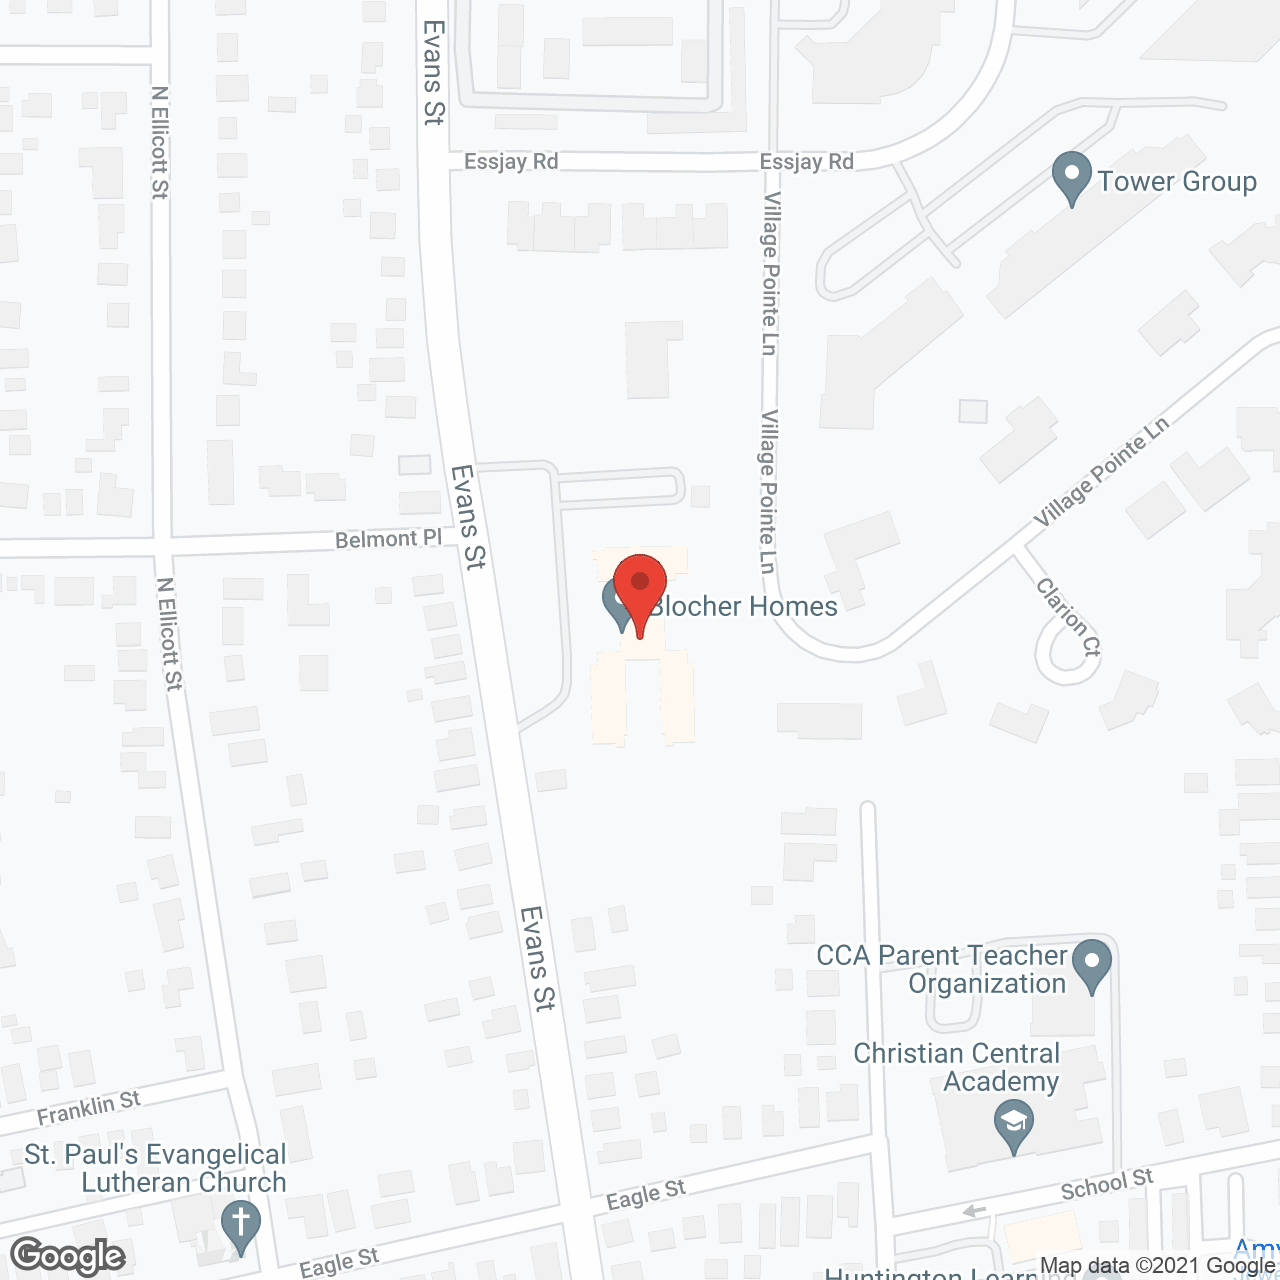 Blocher Homes in google map